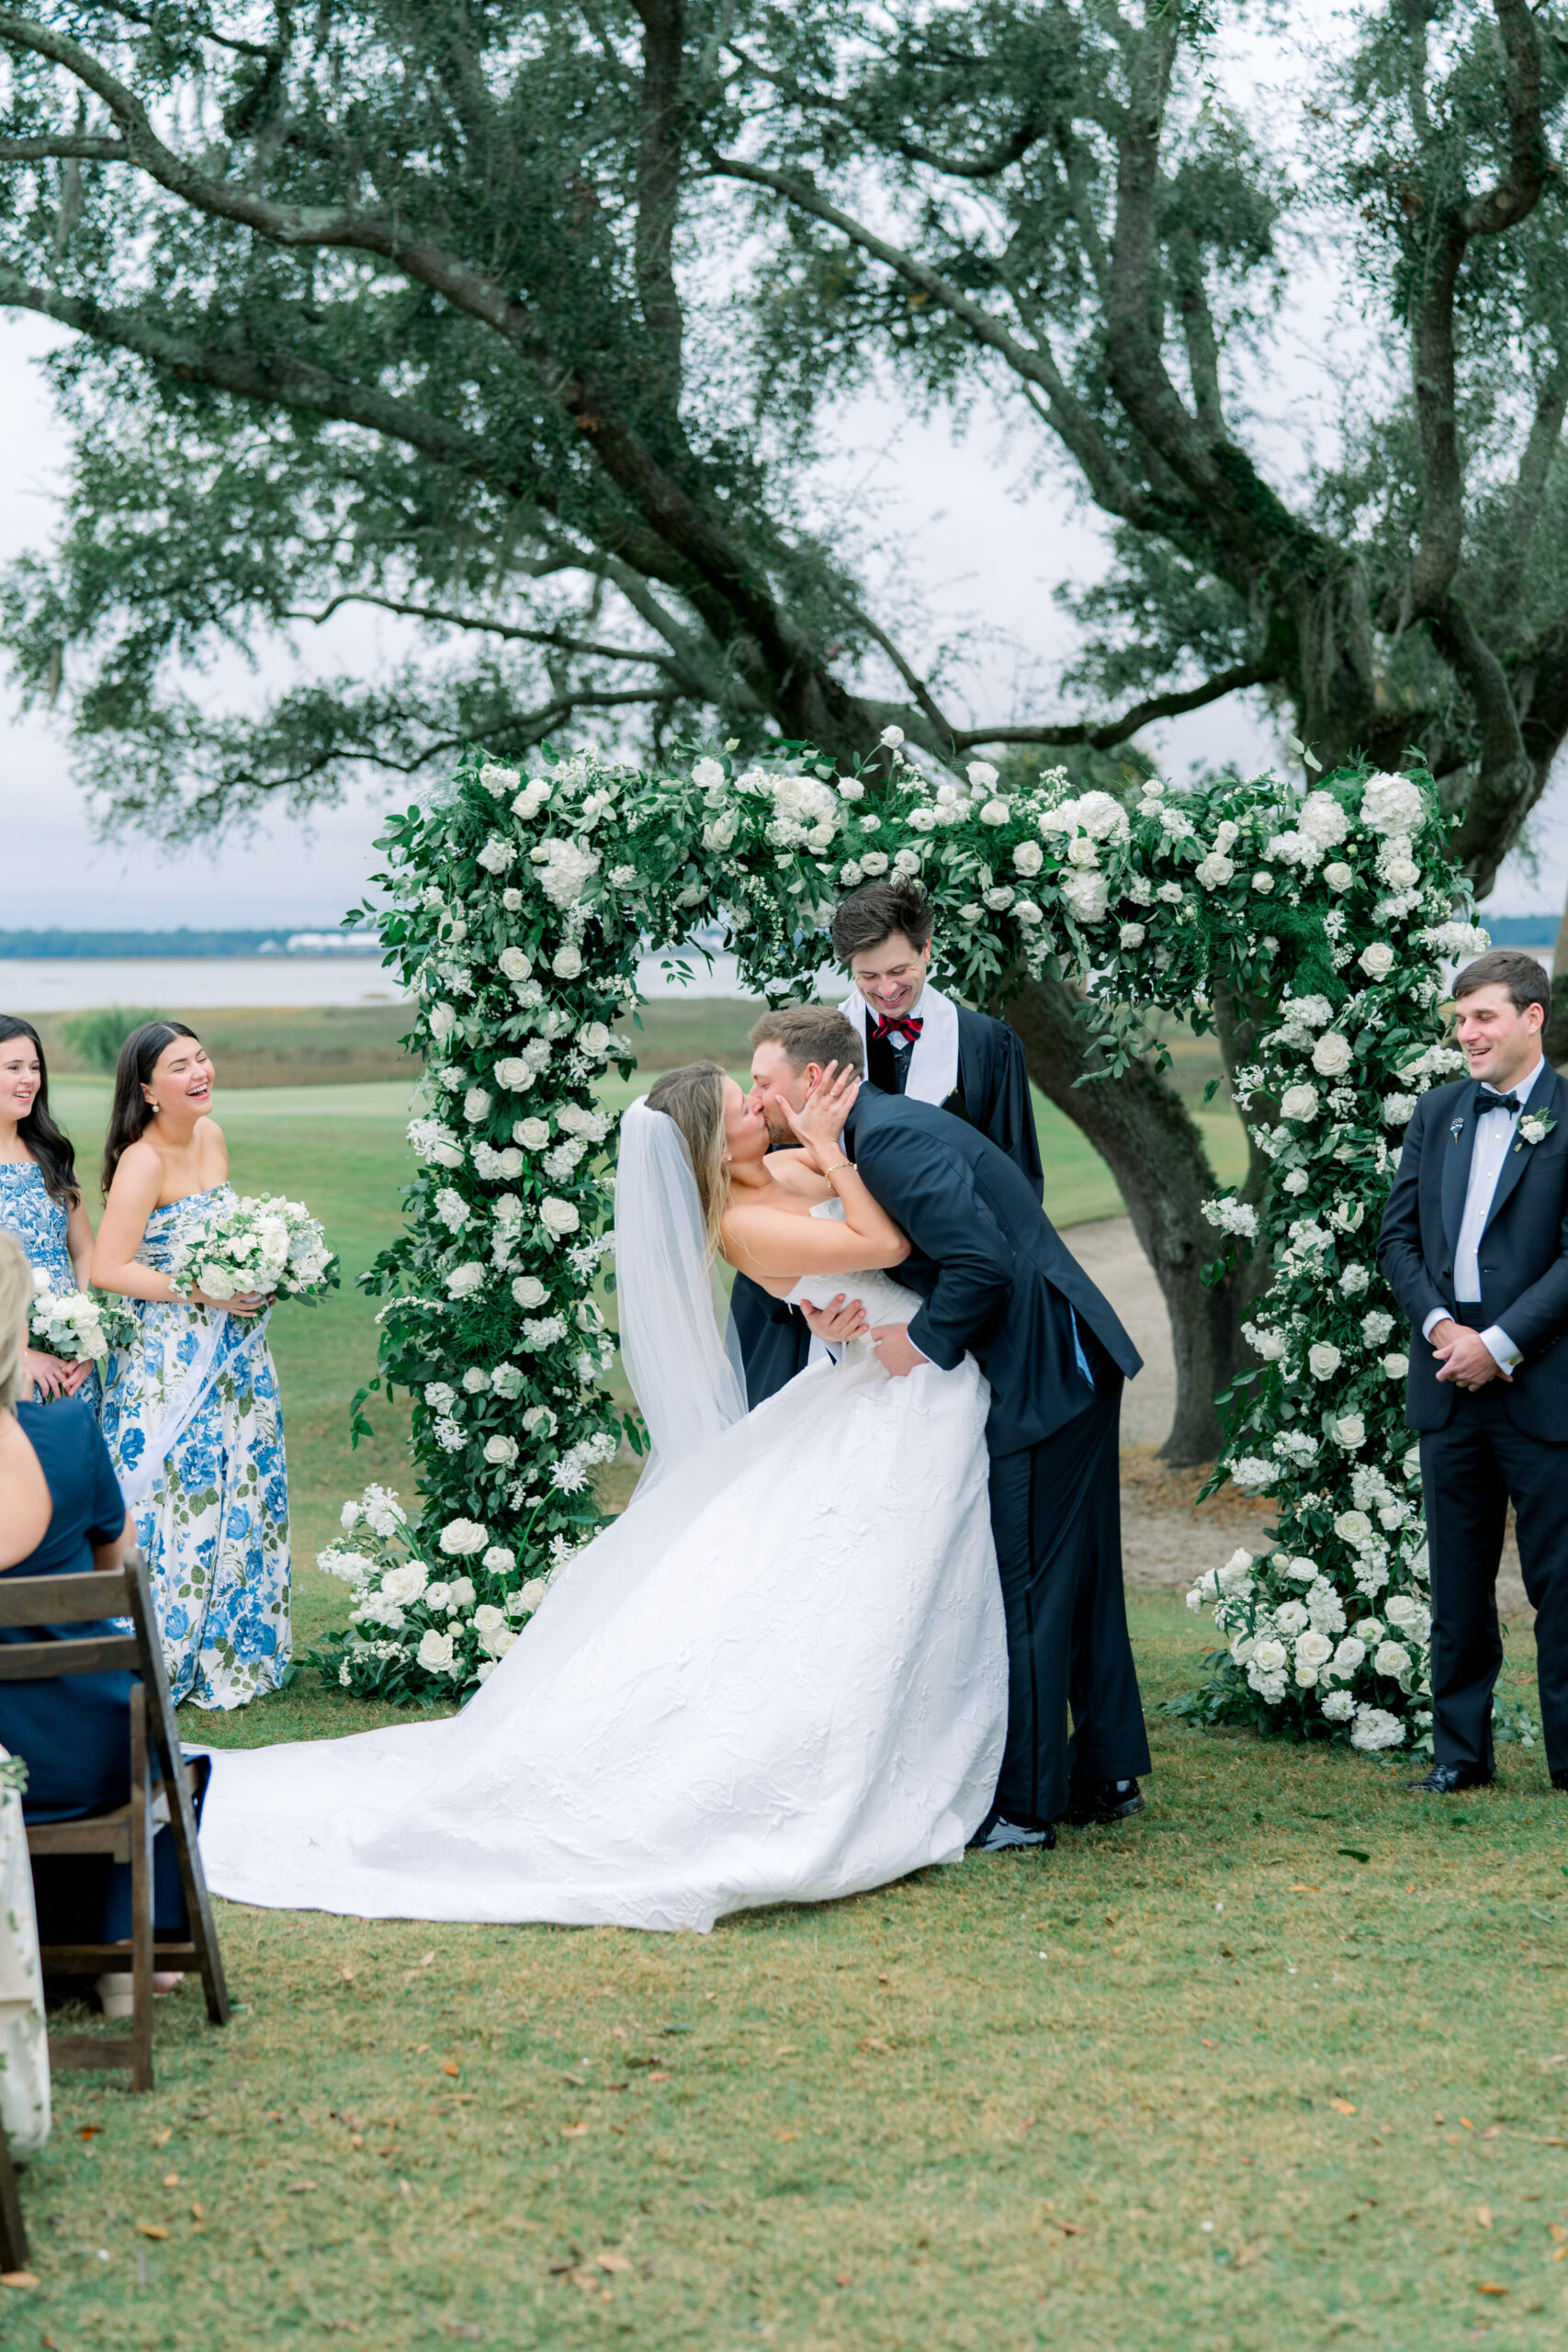 First kiss at Kiawah Island River Course wedding.